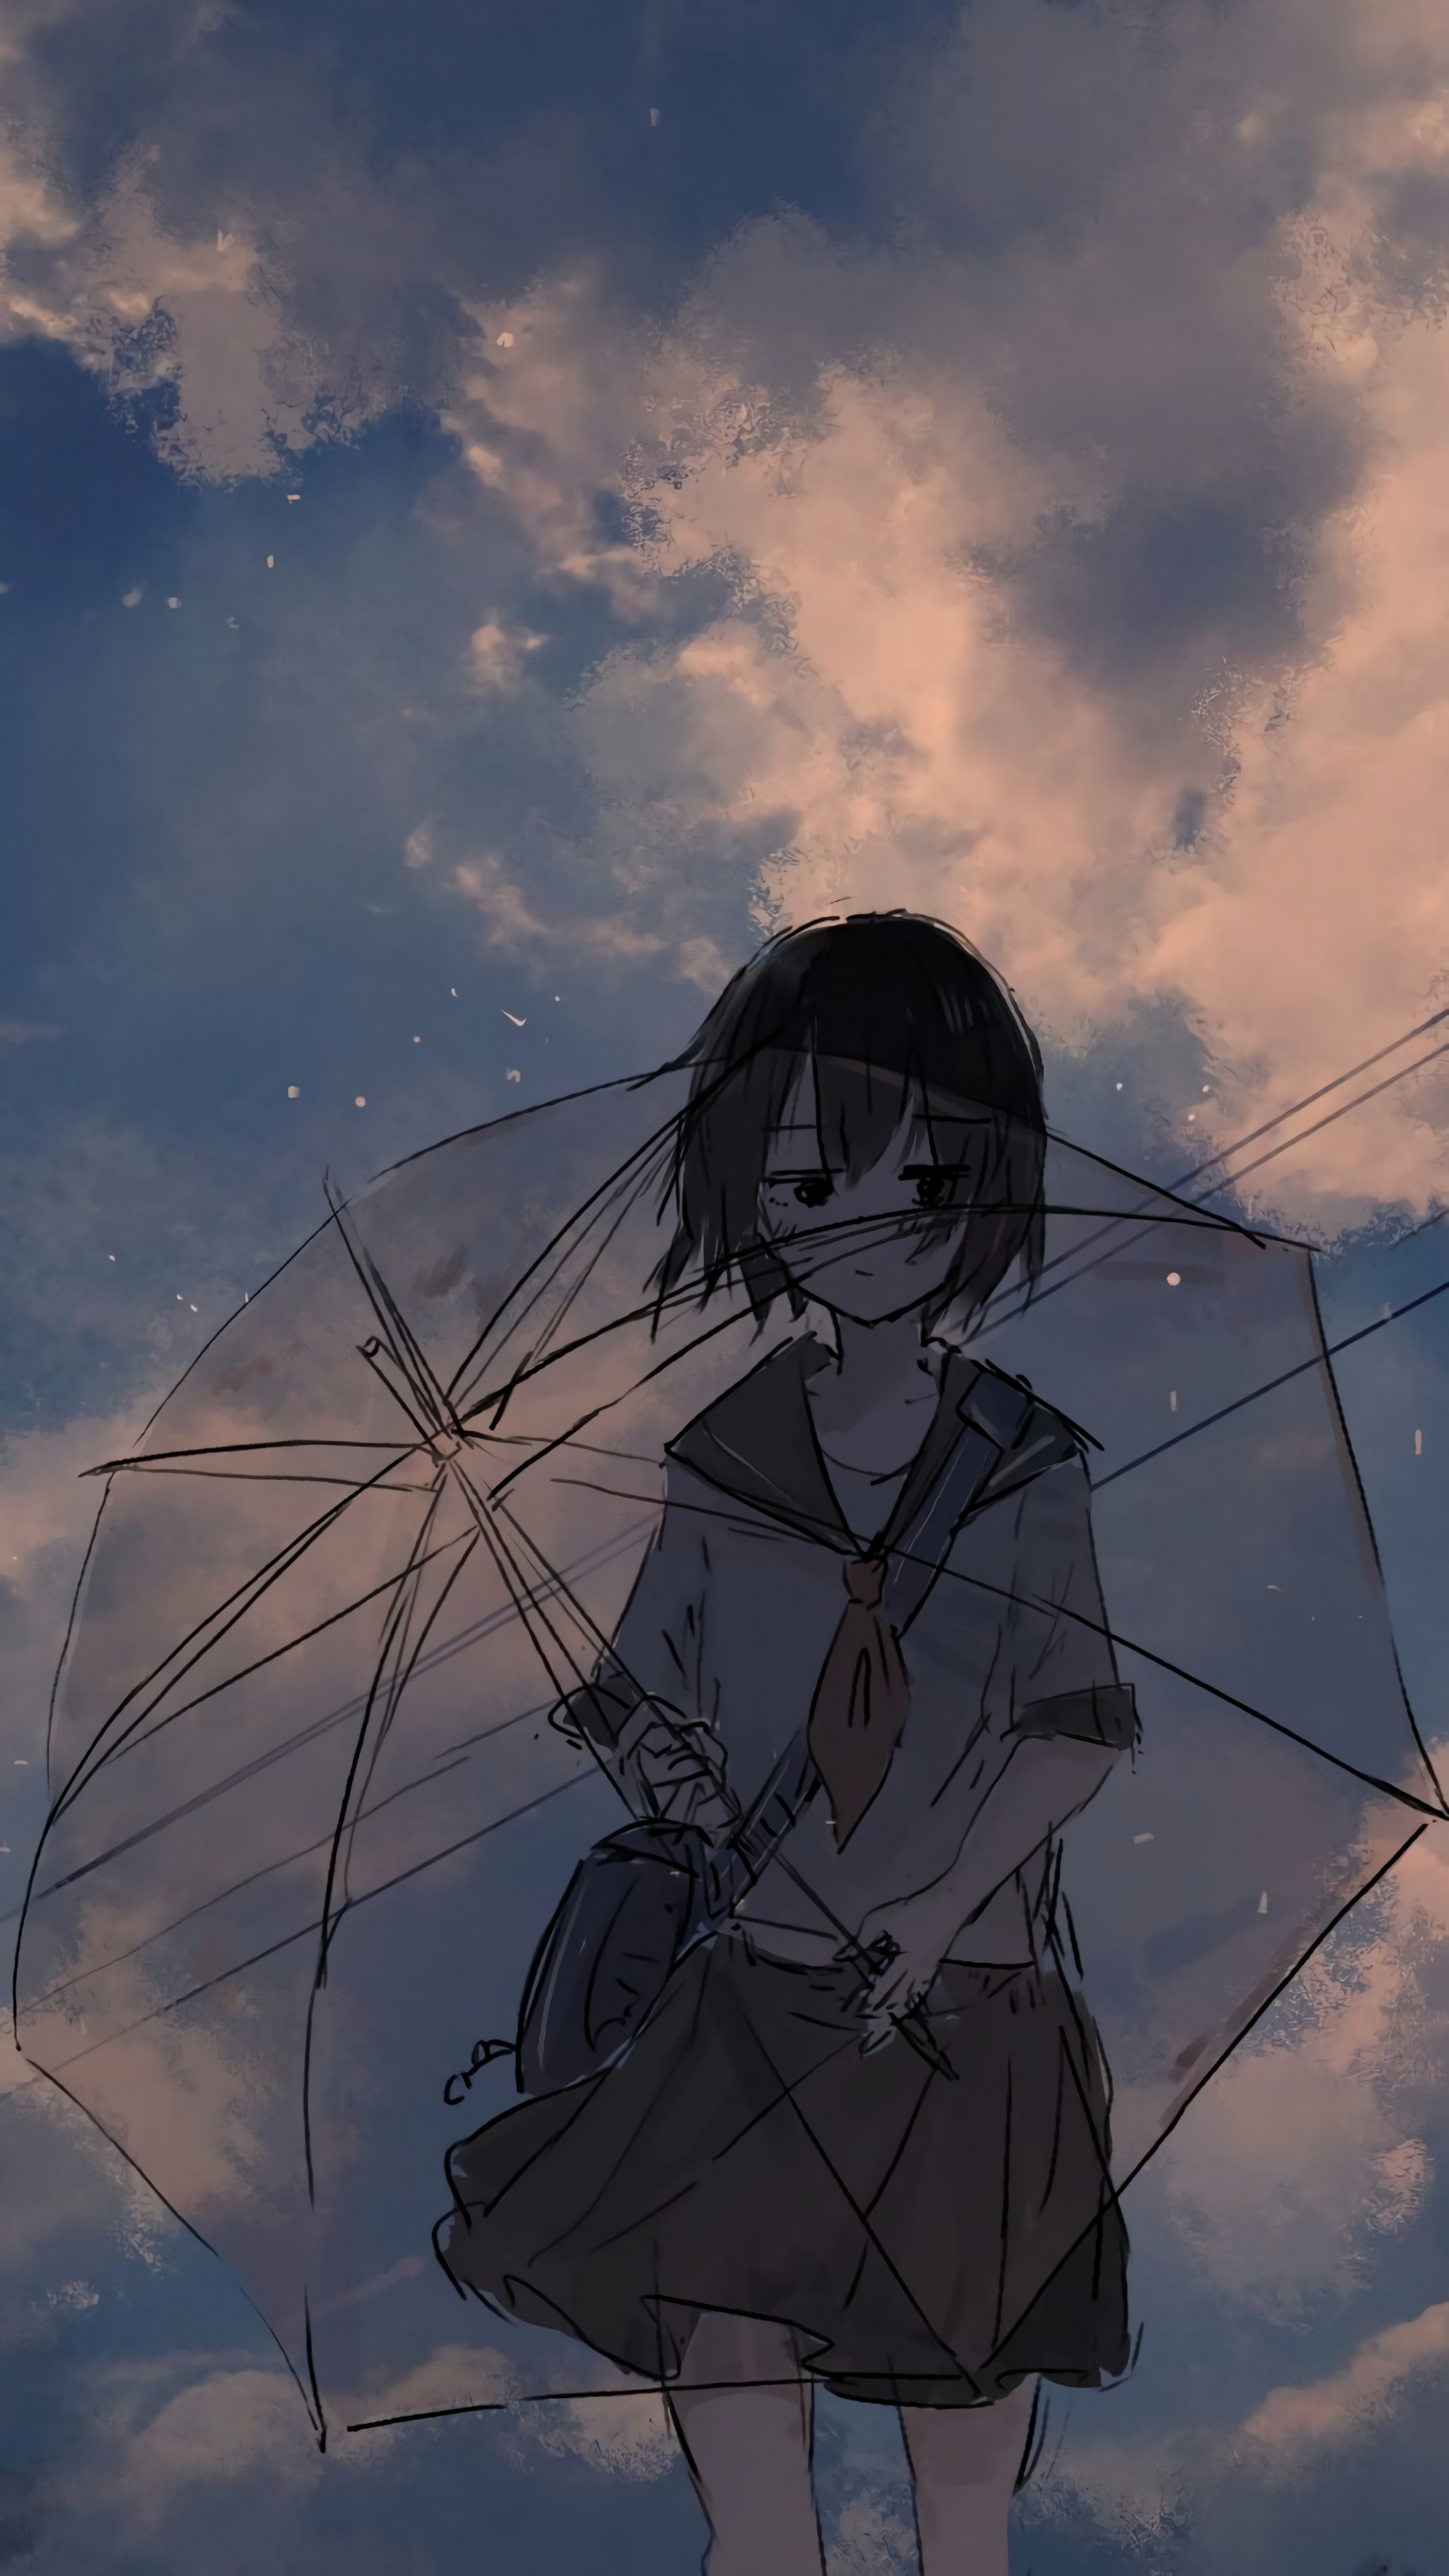 Download 2160x3840 Wallpaper Anime Girl And Umbrella Art 4k Sony Xperia Z5 Premium Dual 2160x3840 Hd Image Background 246